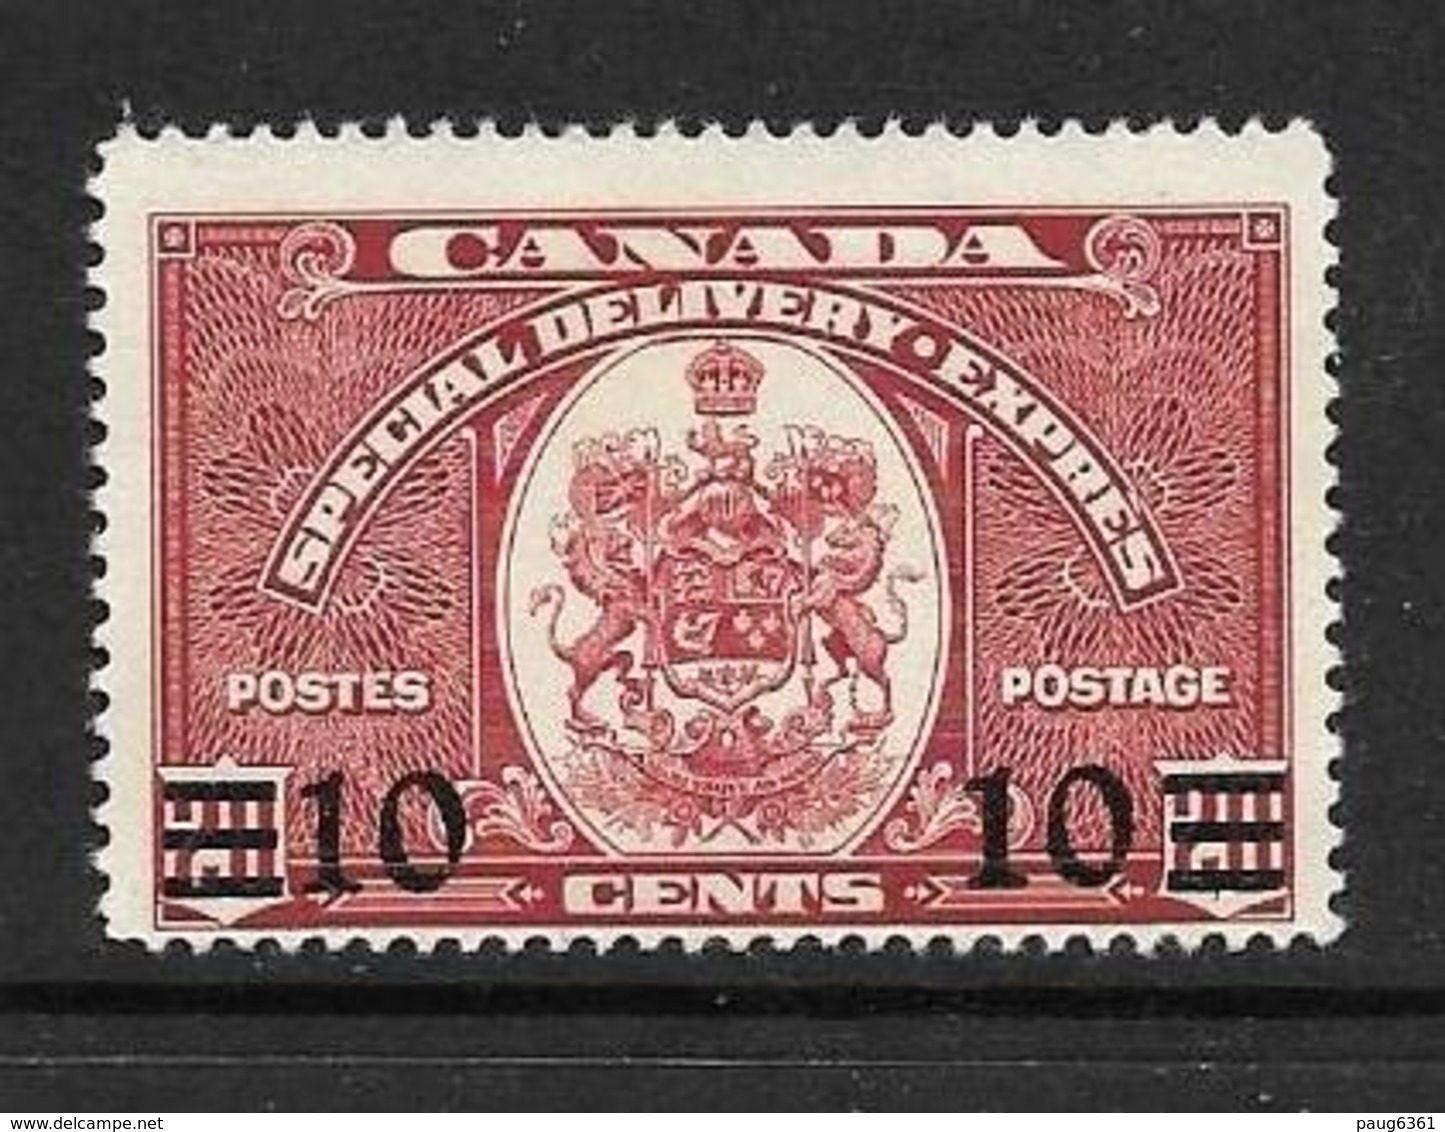 CANADA 1938/39 EXPRES YVERT N°E9 NEUF NG - Correo Urgente